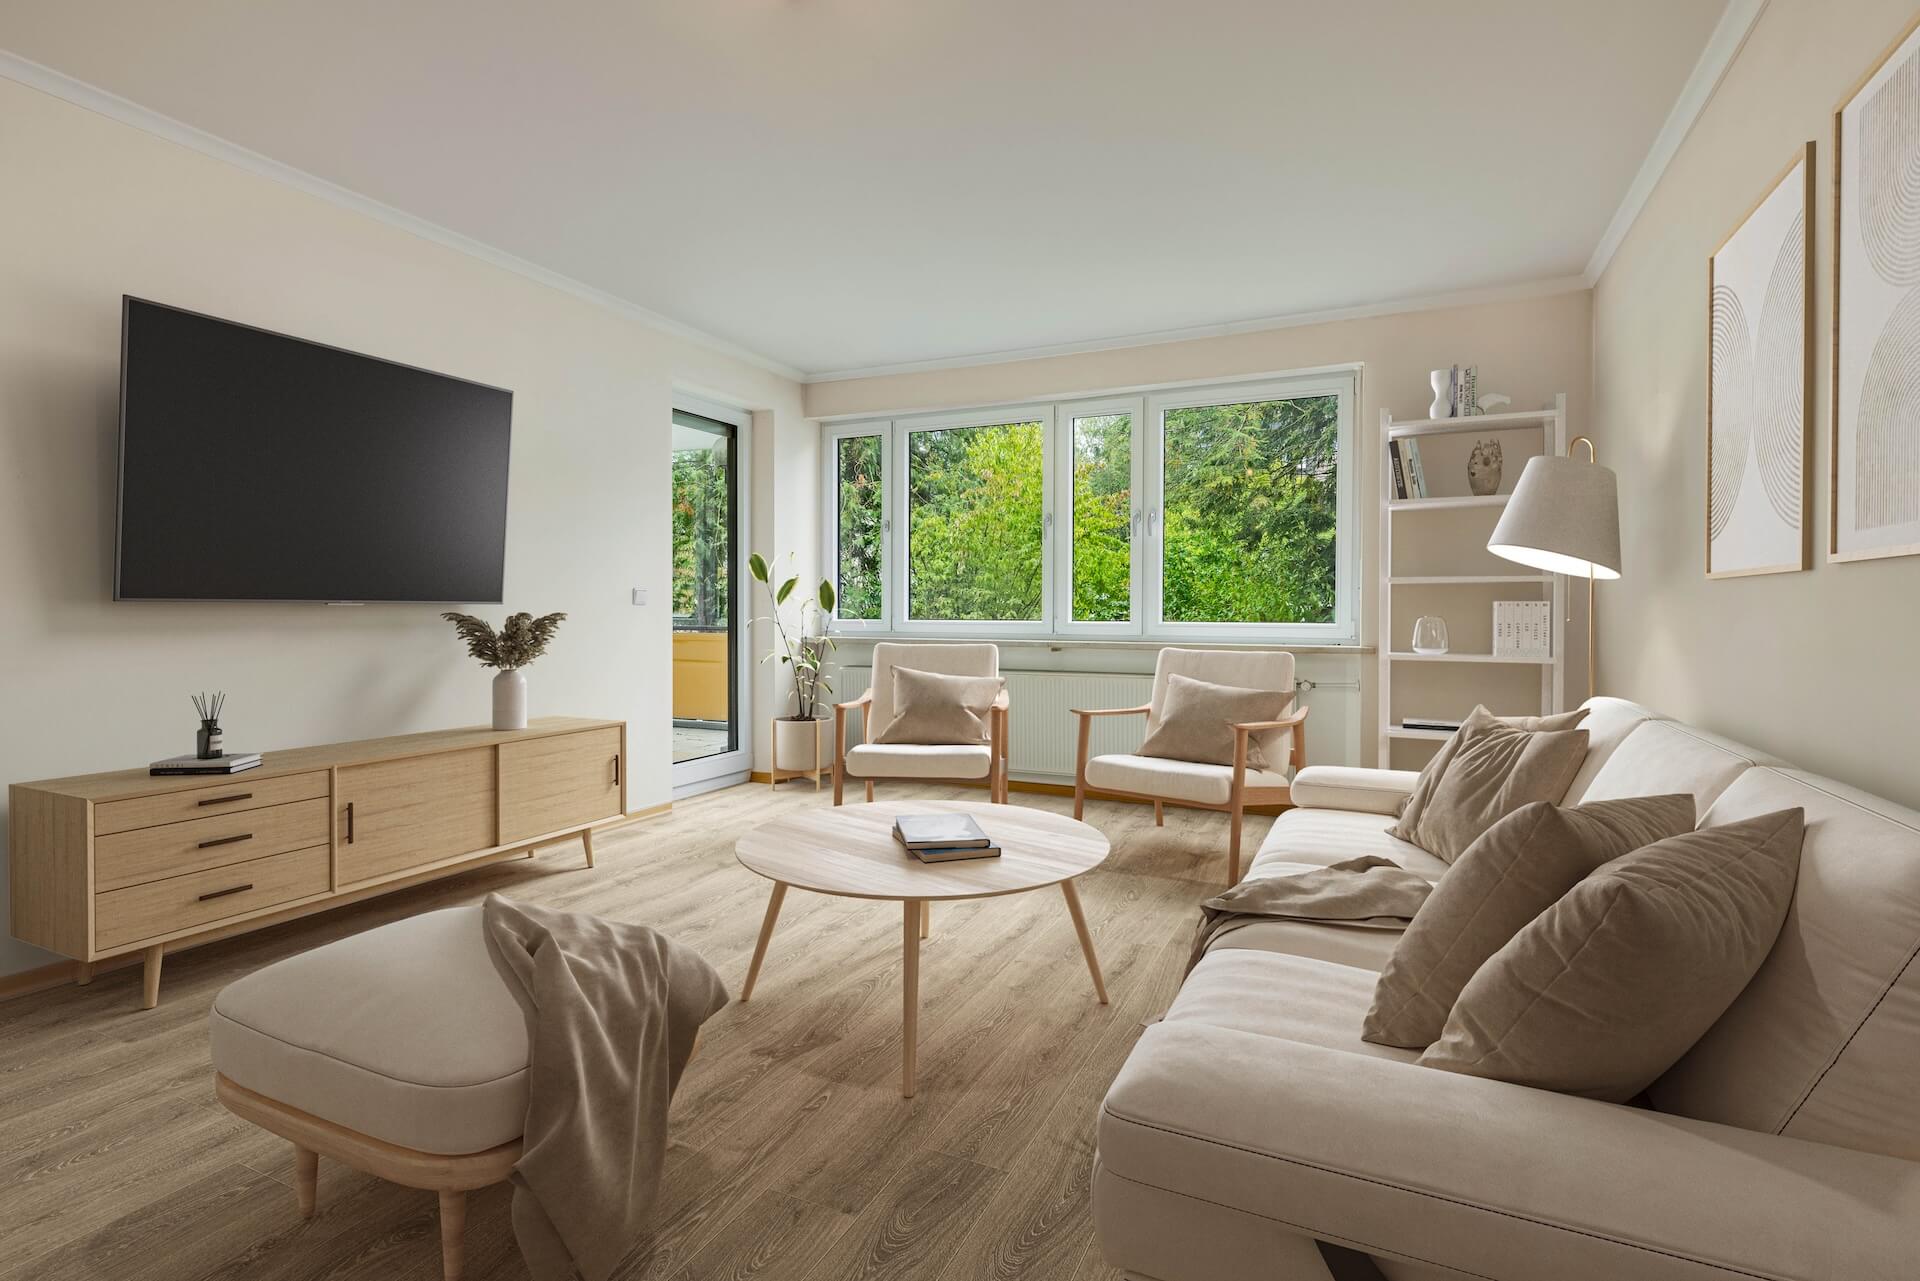 Living room: furnishing idea